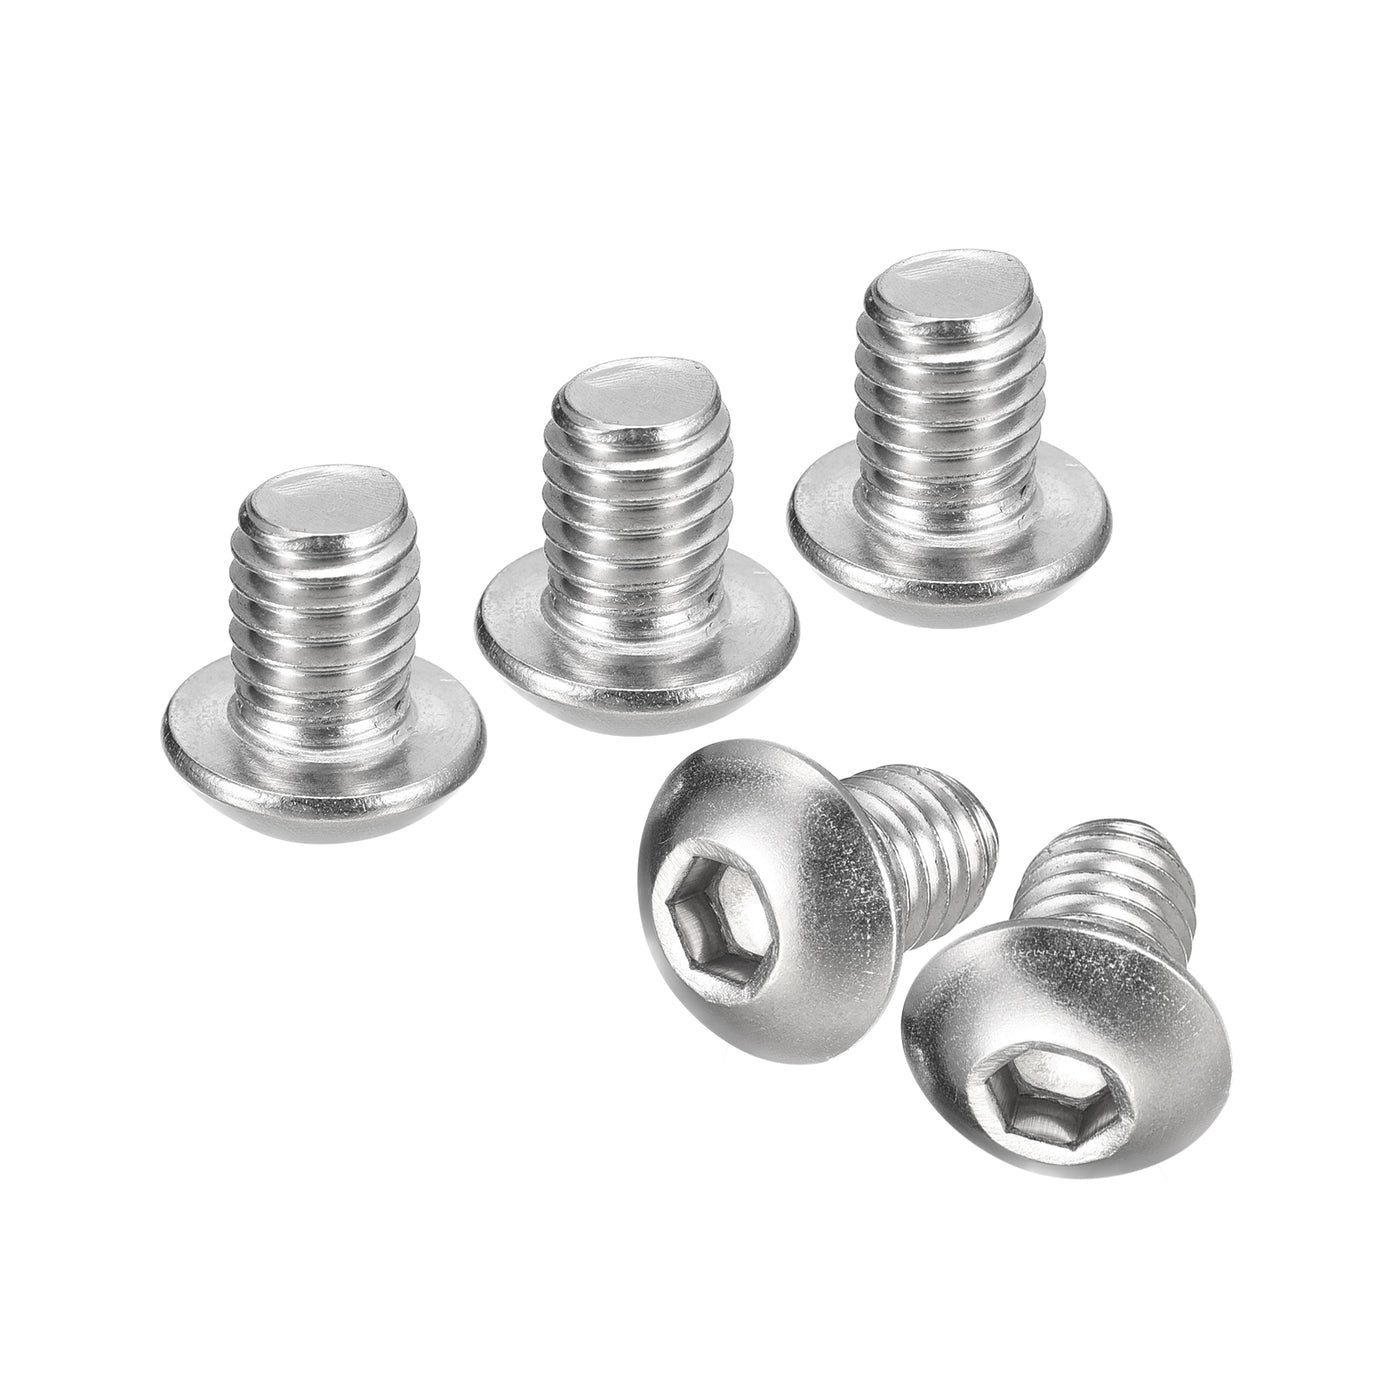 uxcell Uxcell 3/8-16x1/2" Button Head Socket Cap Screws, 5pcs 304 Stainless Steel Screws